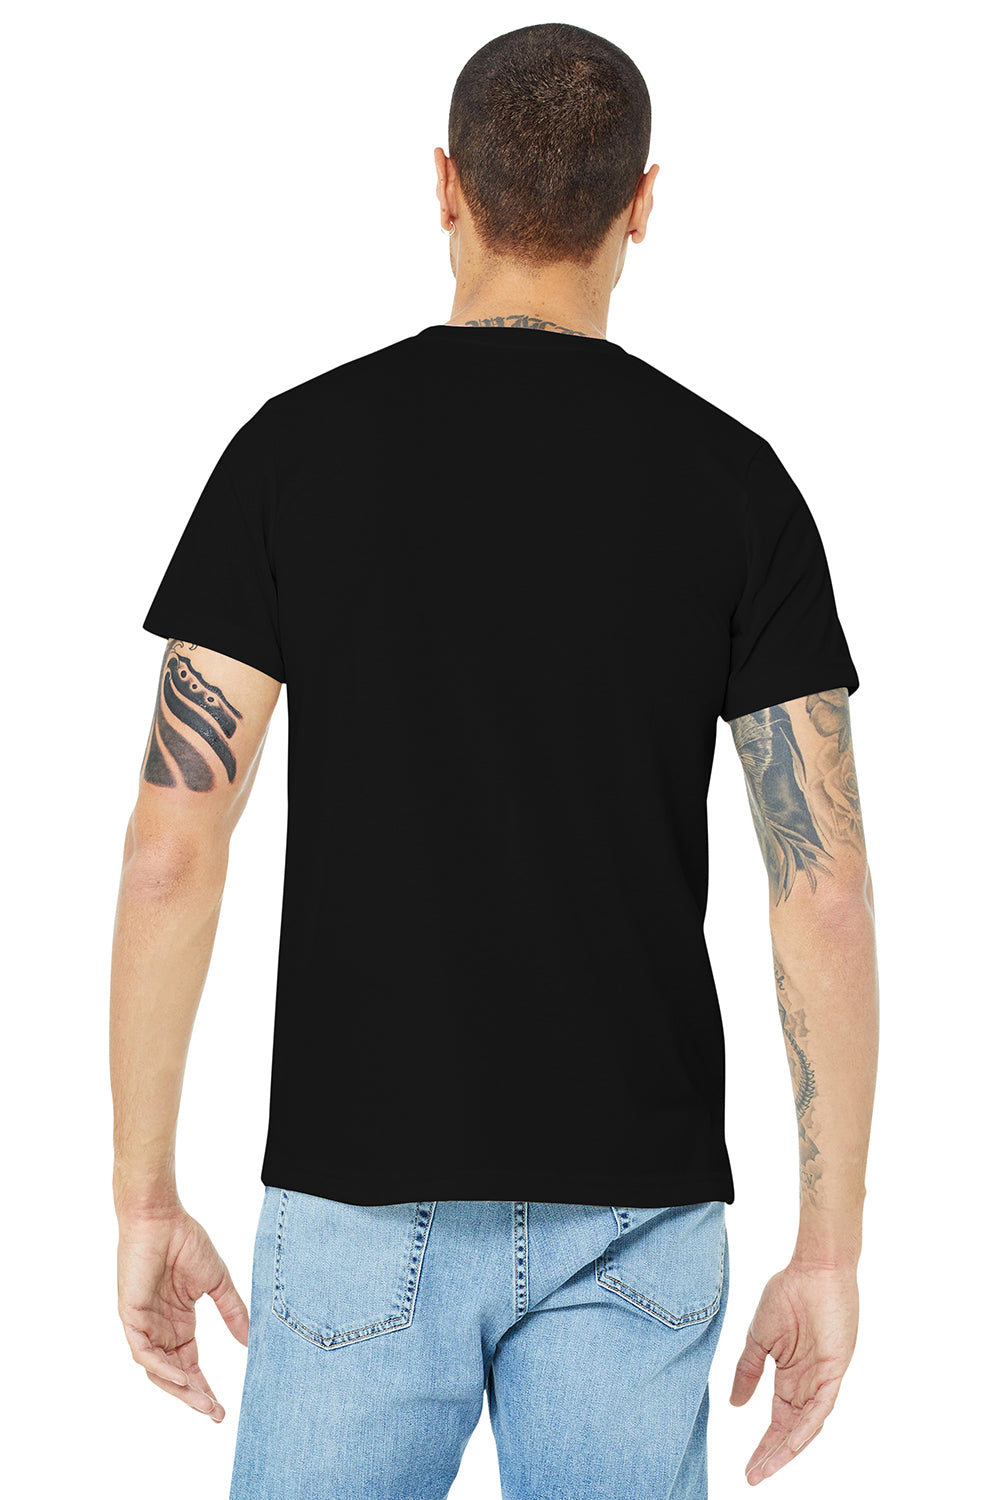 Bella + Canvas 3001U/3001USA Mens USA Made Jersey Short Sleeve Crewneck T-Shirt Black Model Back